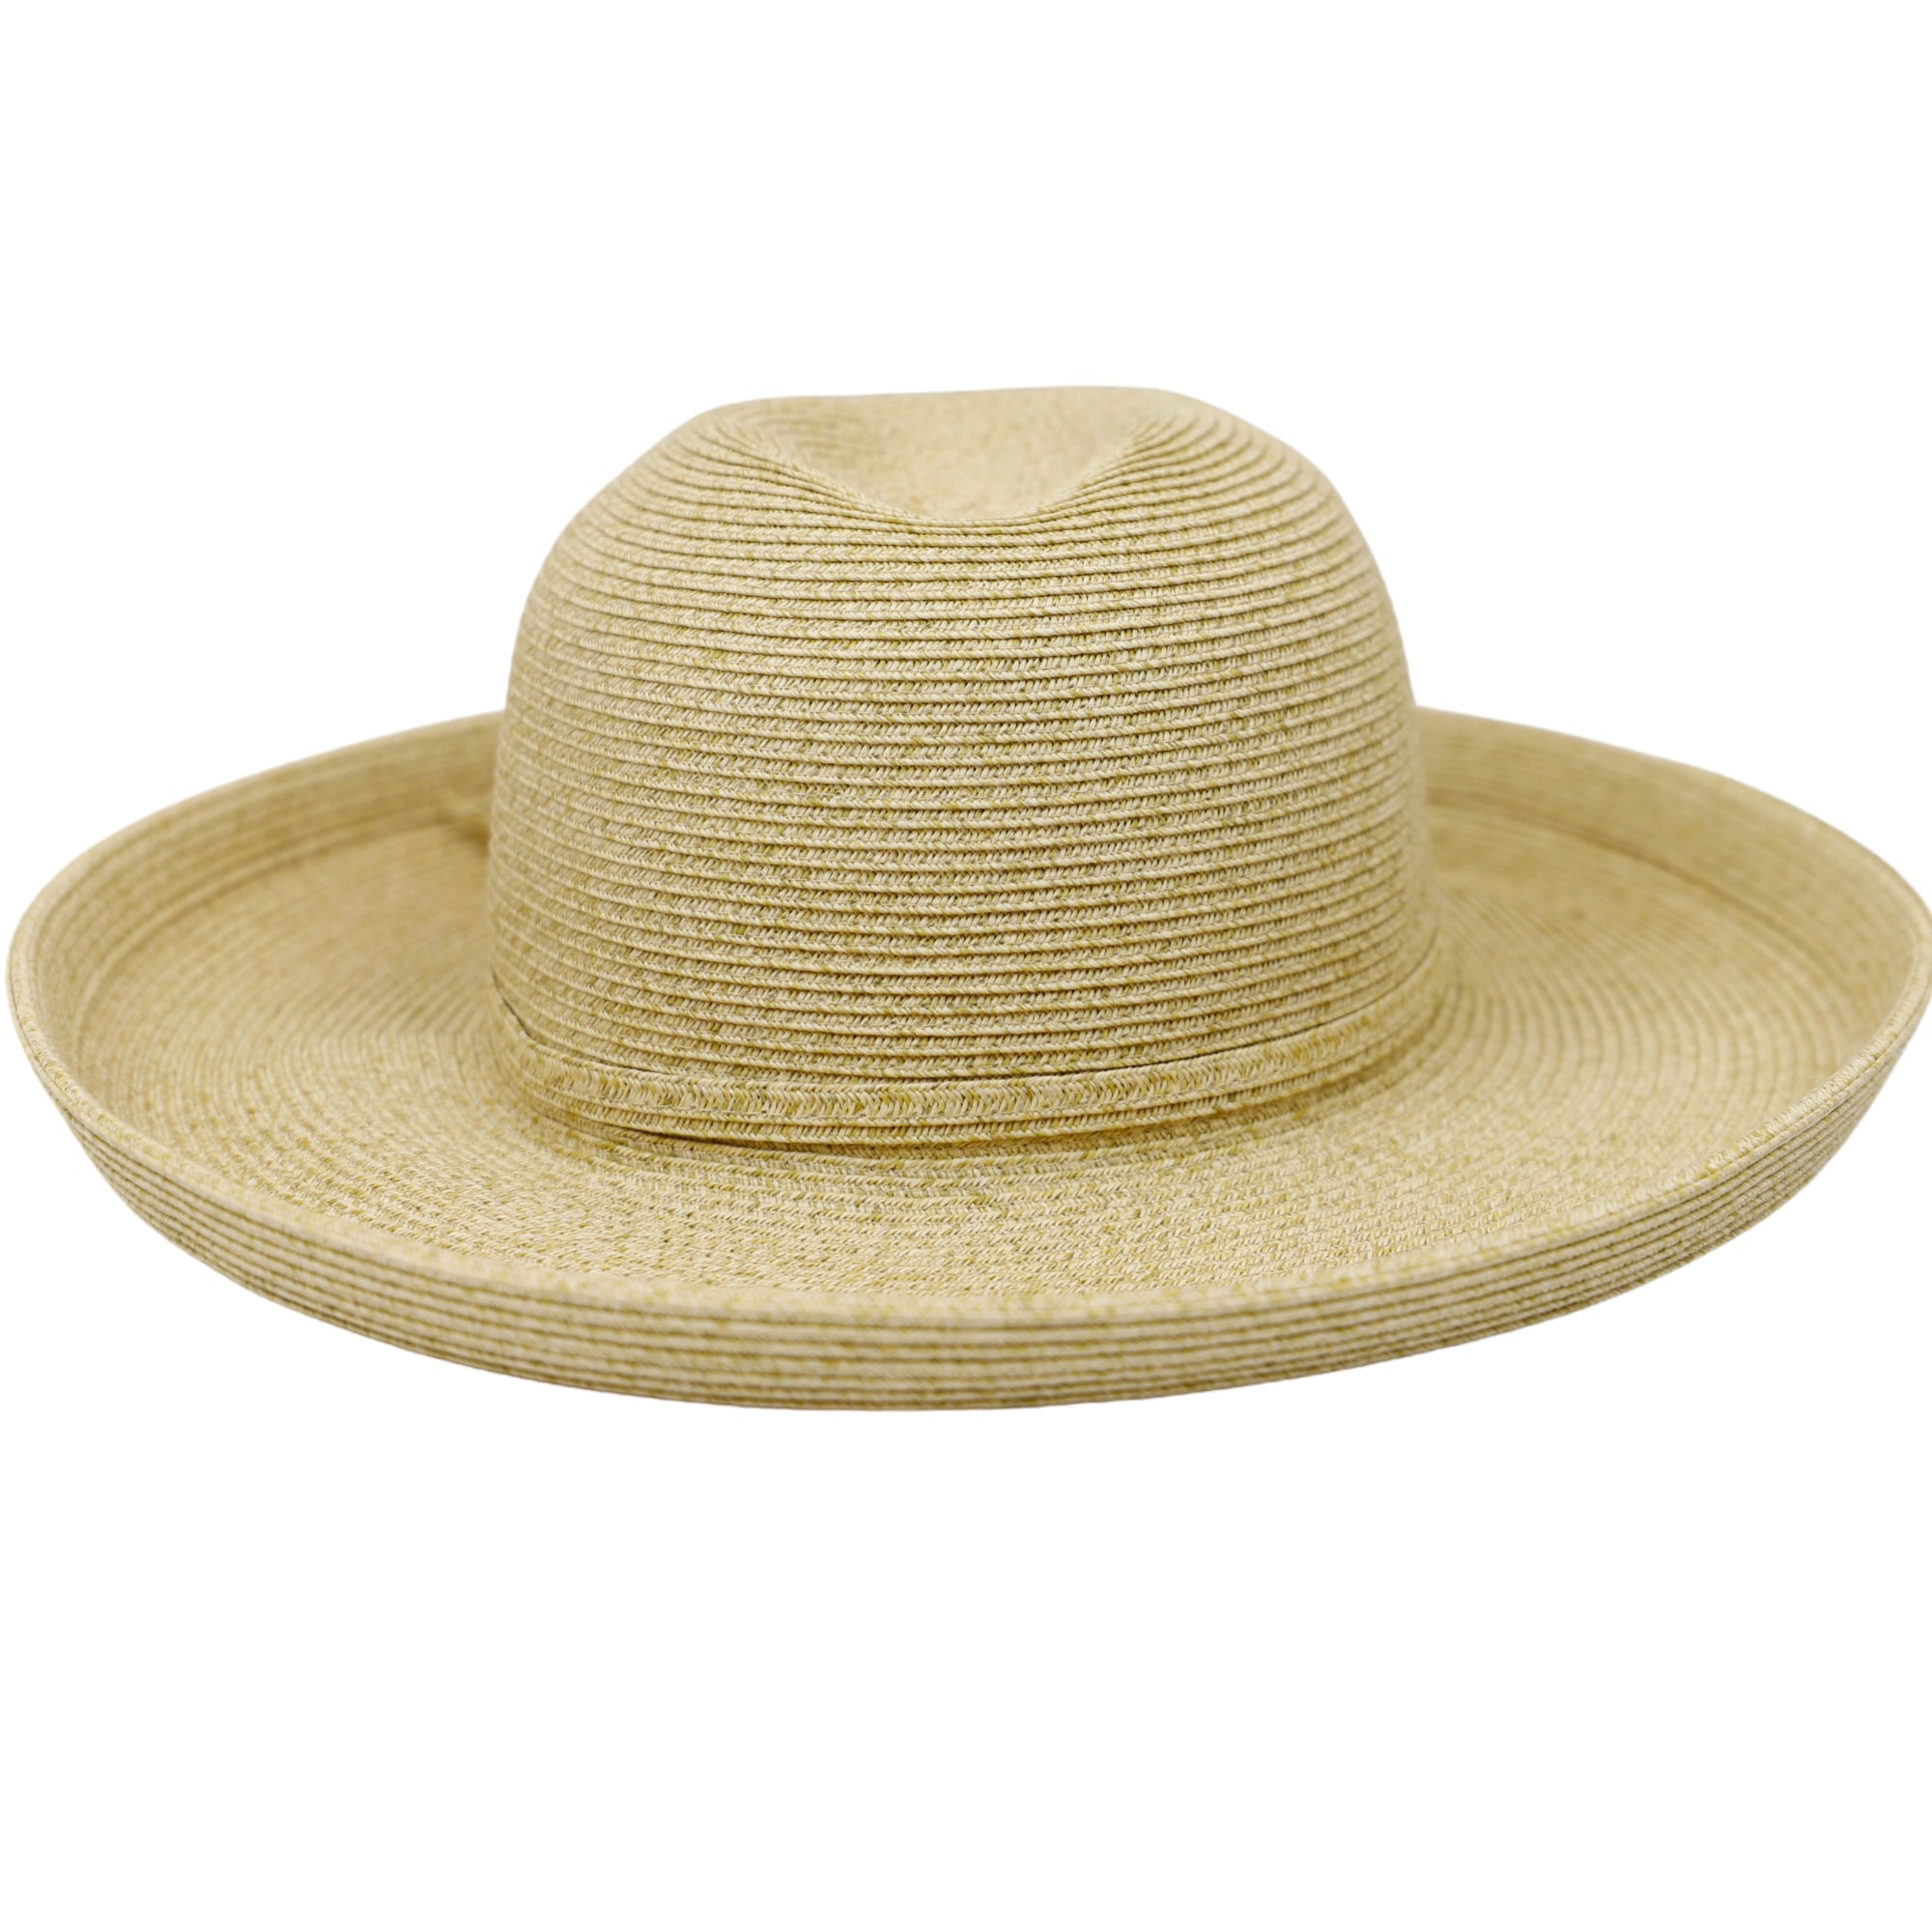 Top 10 Gardening Hats – San Diego Hat Company